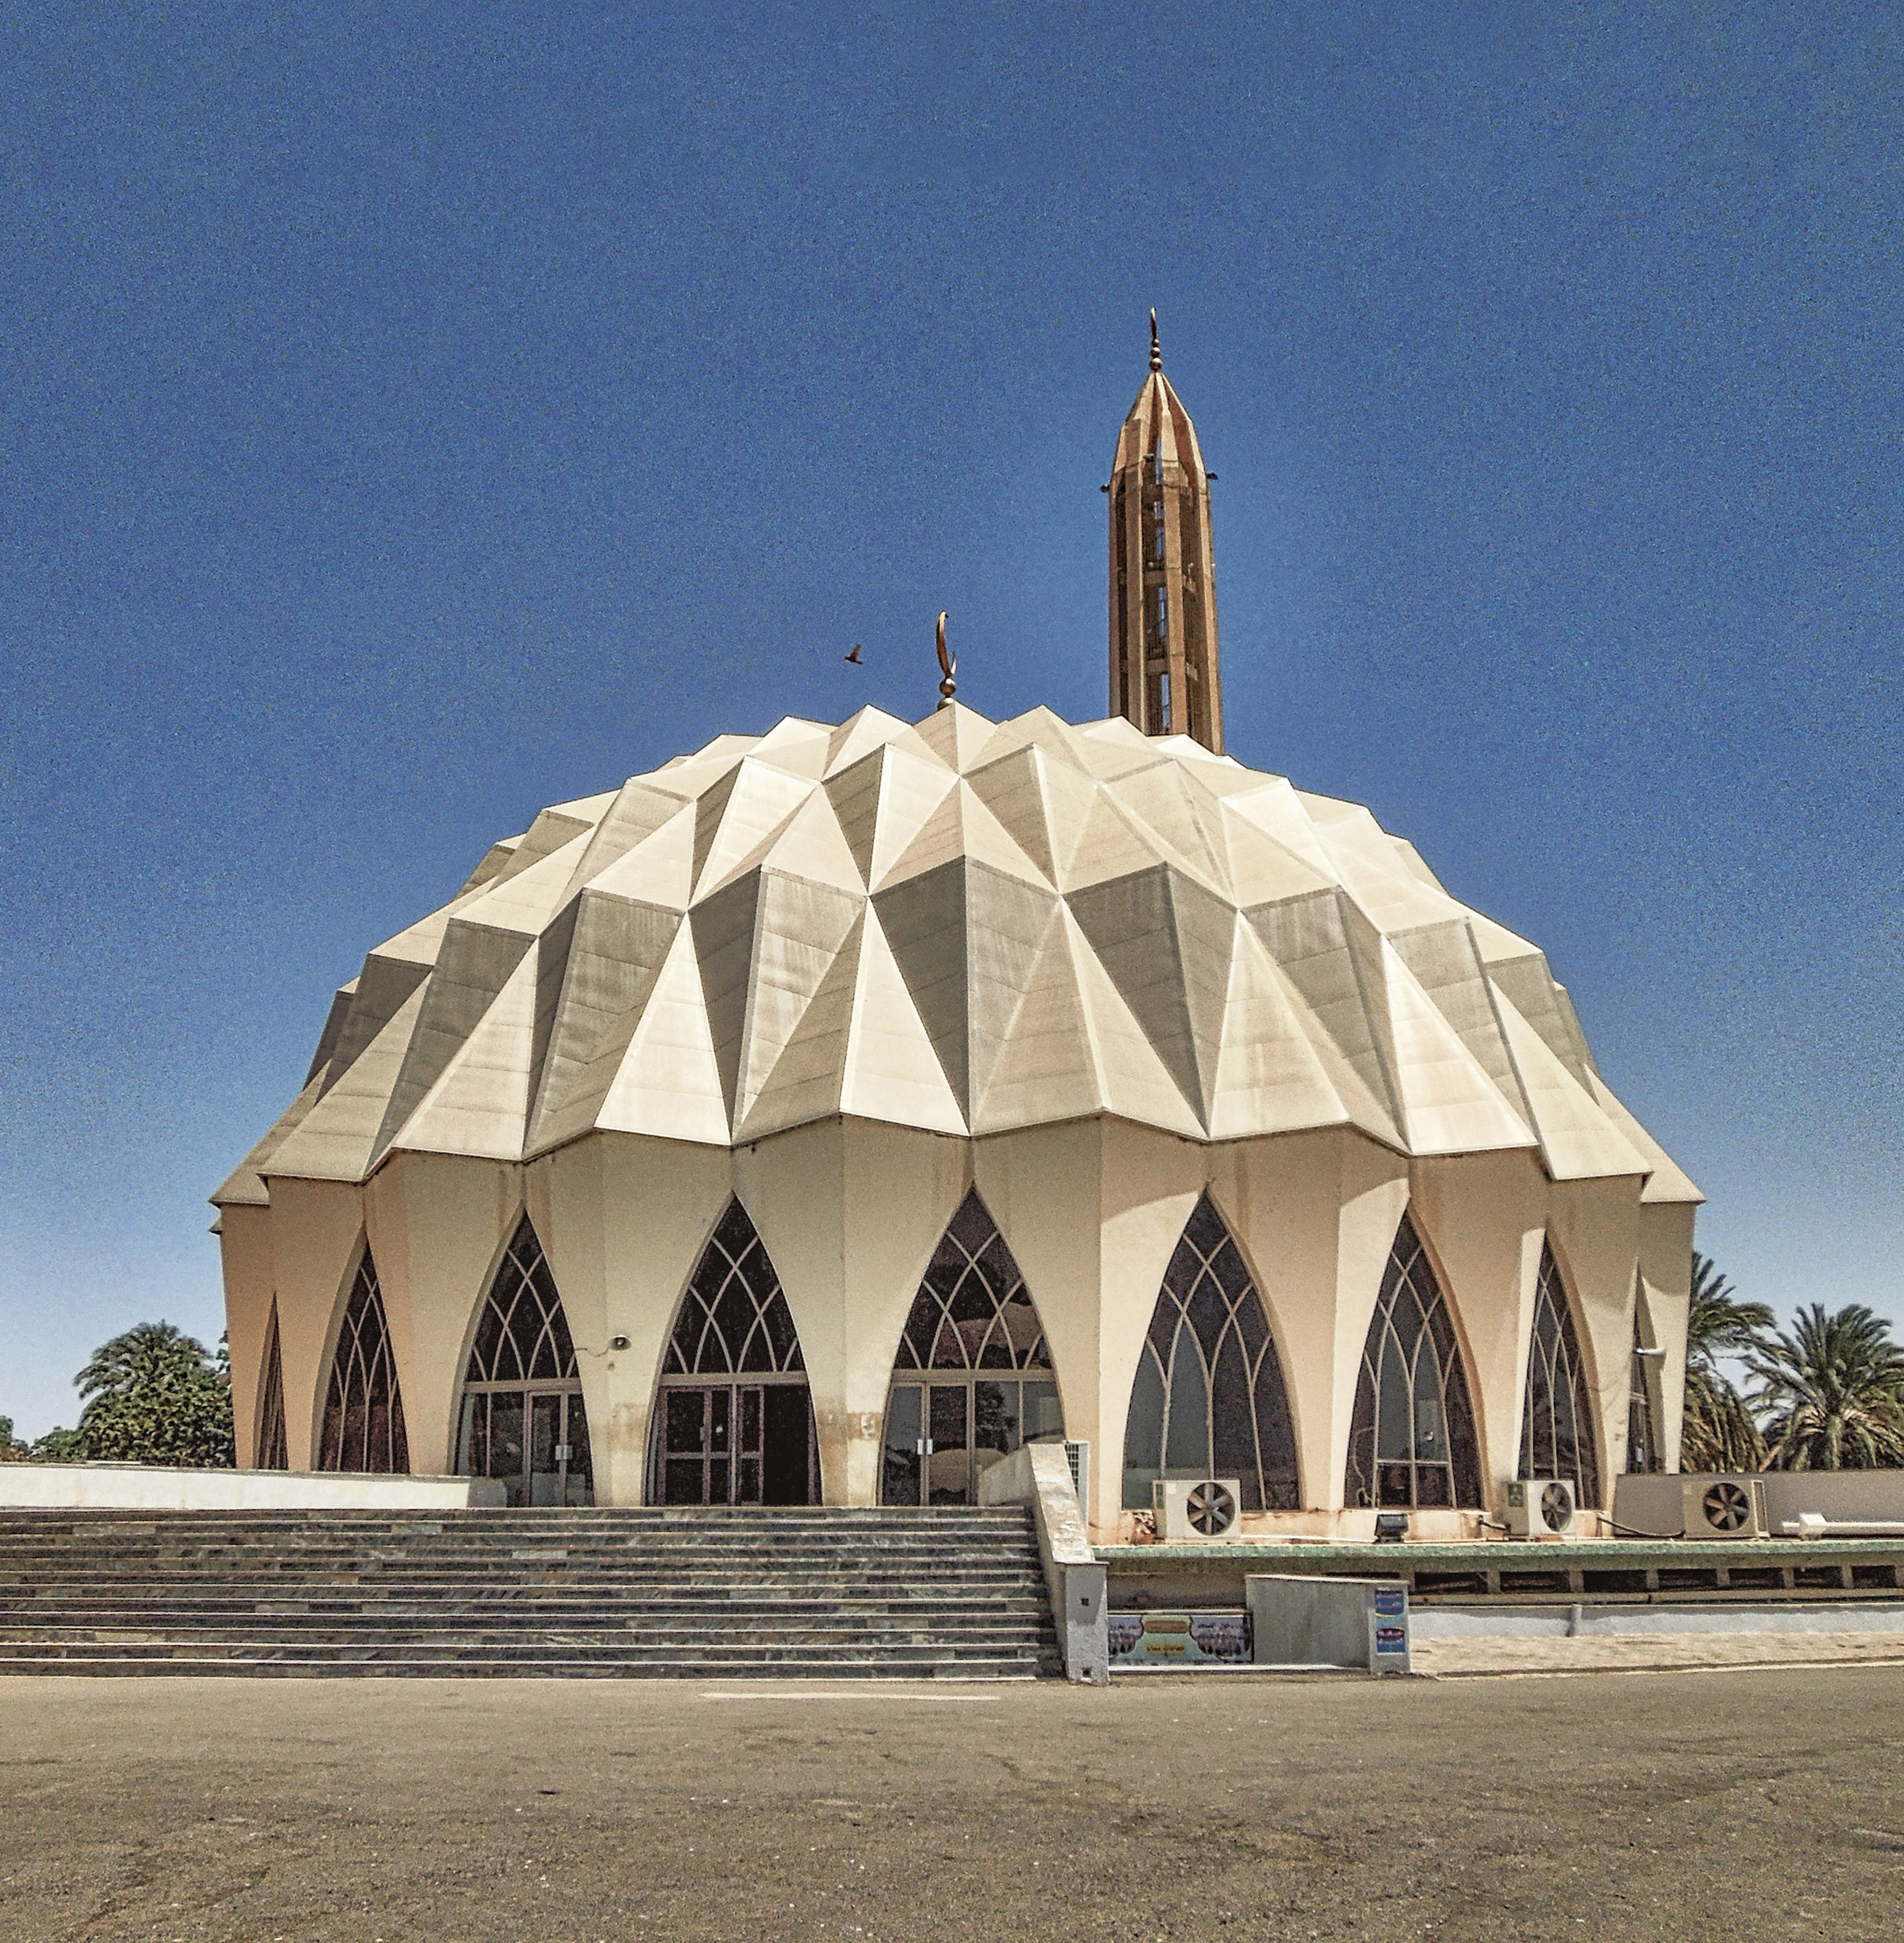 Descubra a incrível arquitetura do Nordeste da África